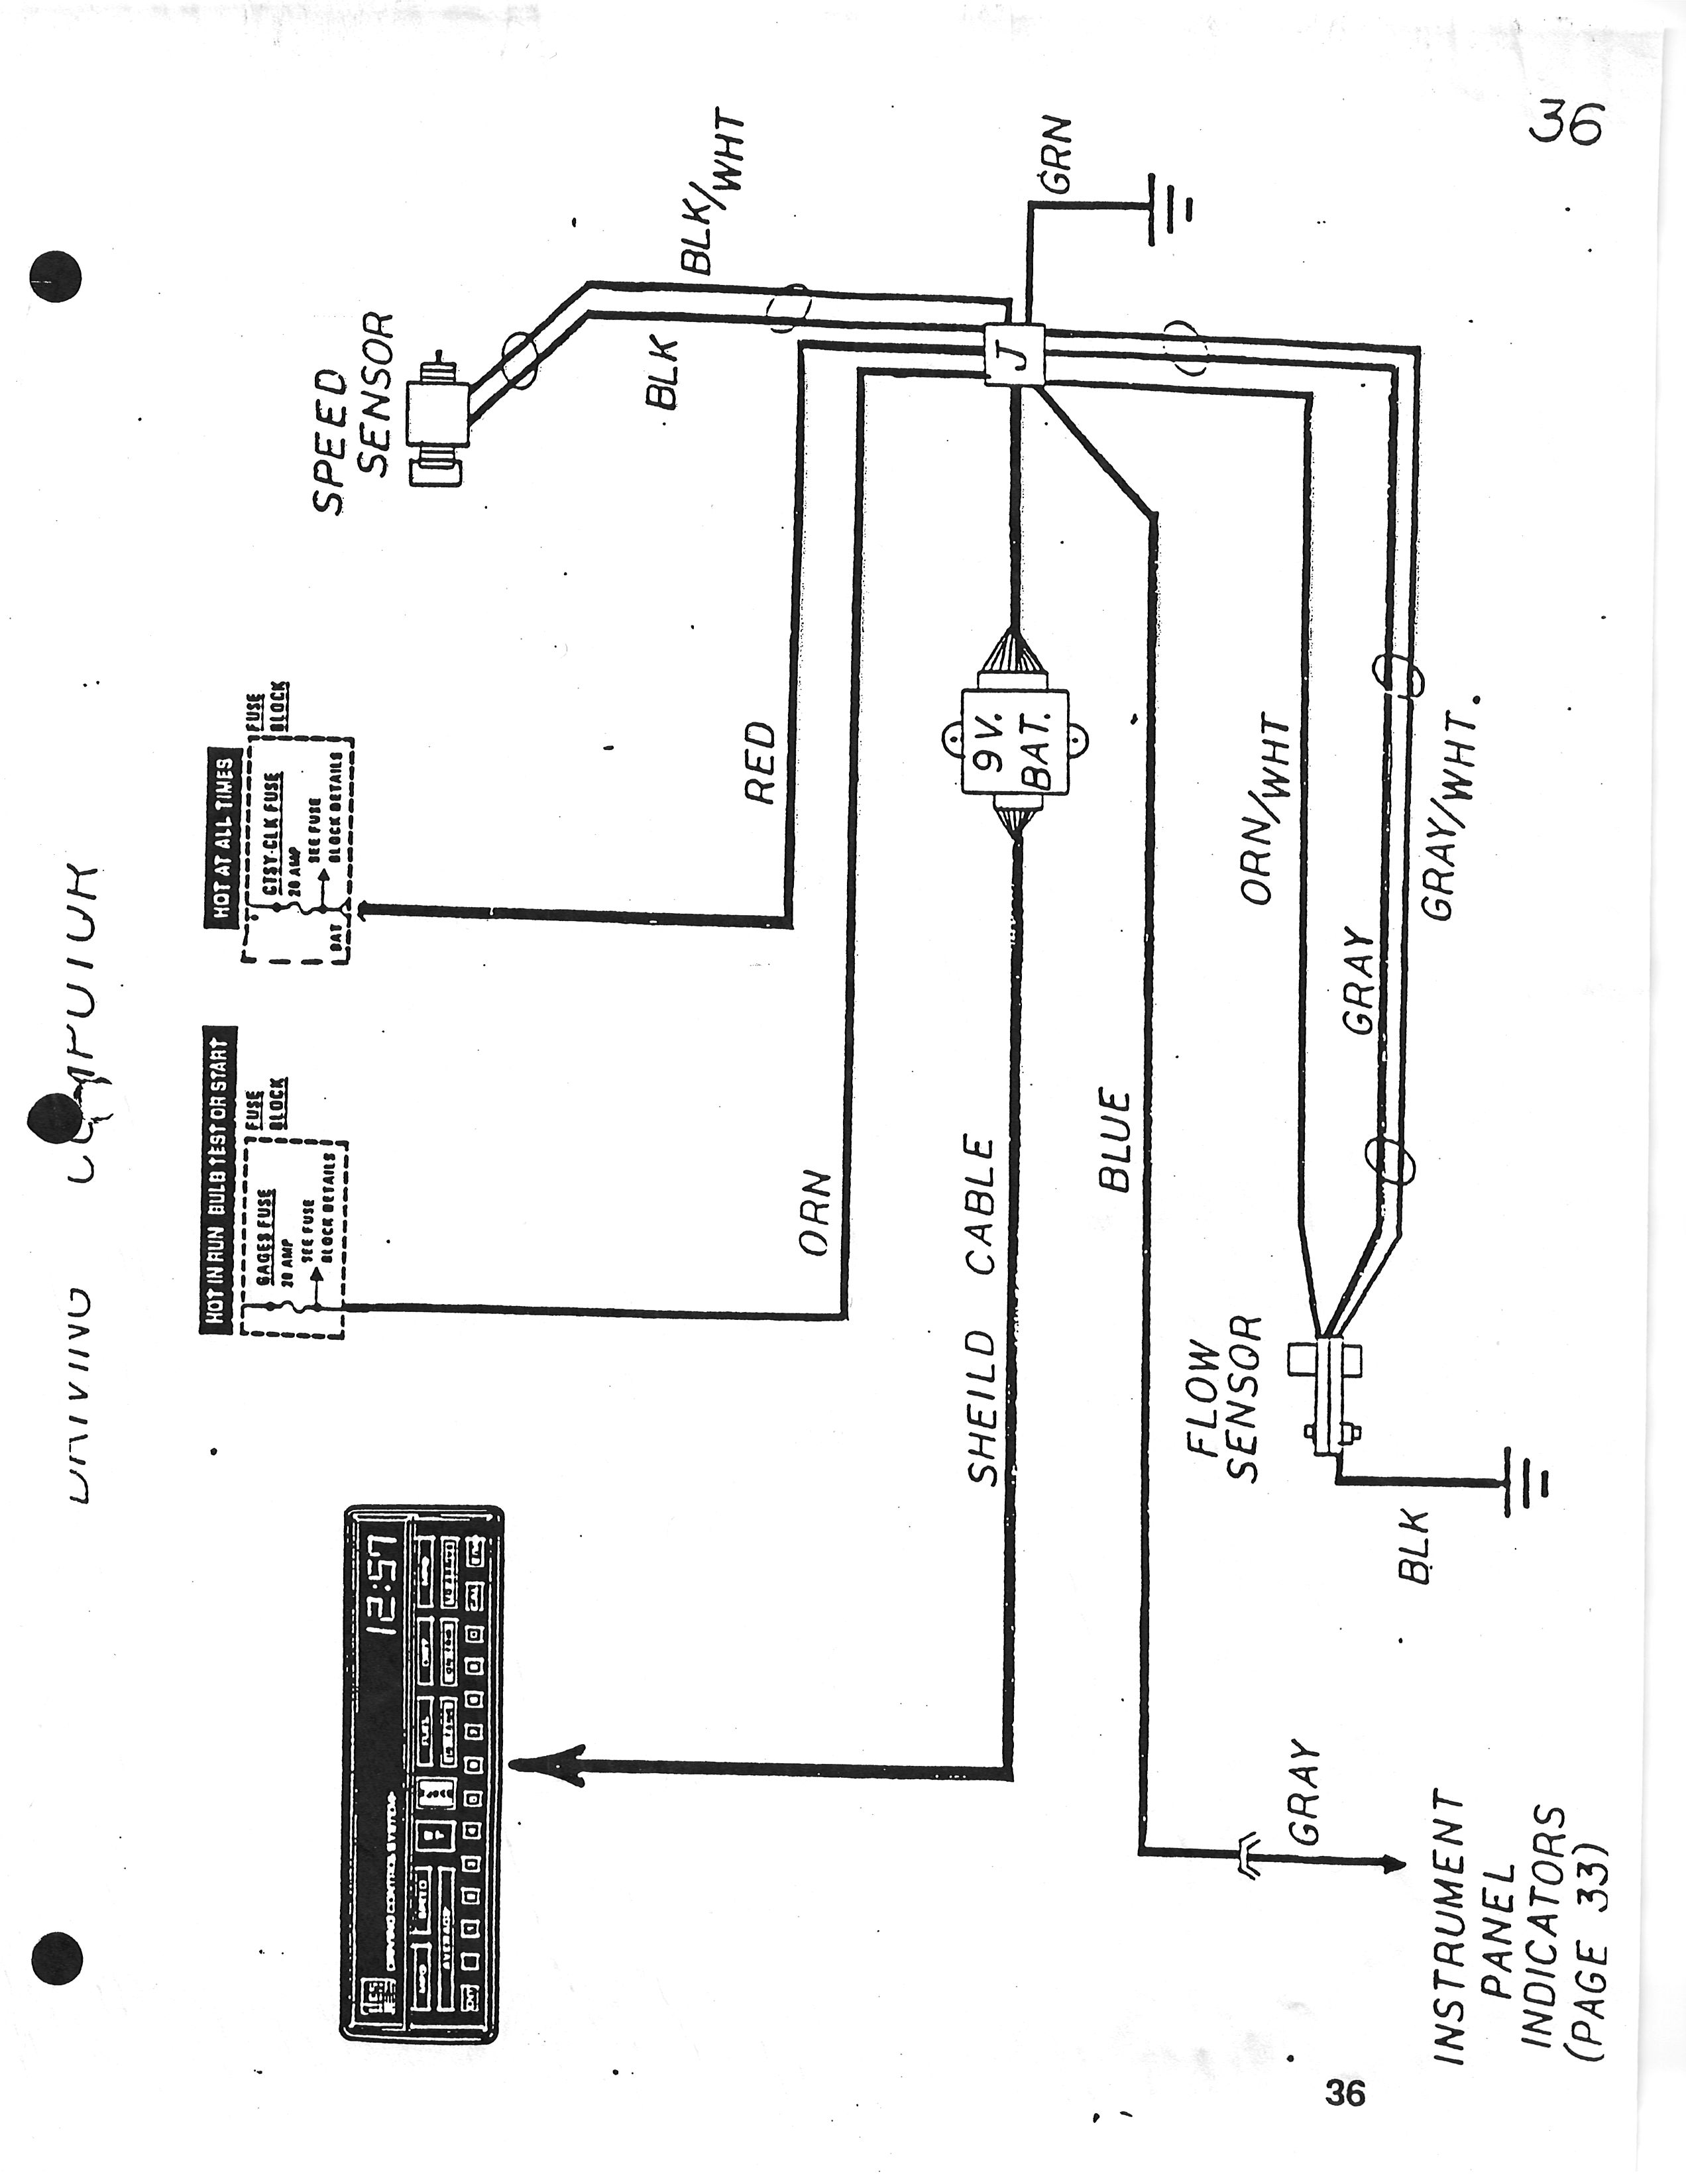 1987 Avanti Wiring Diagrams - 1984-91 Avanti - AOAI Forums